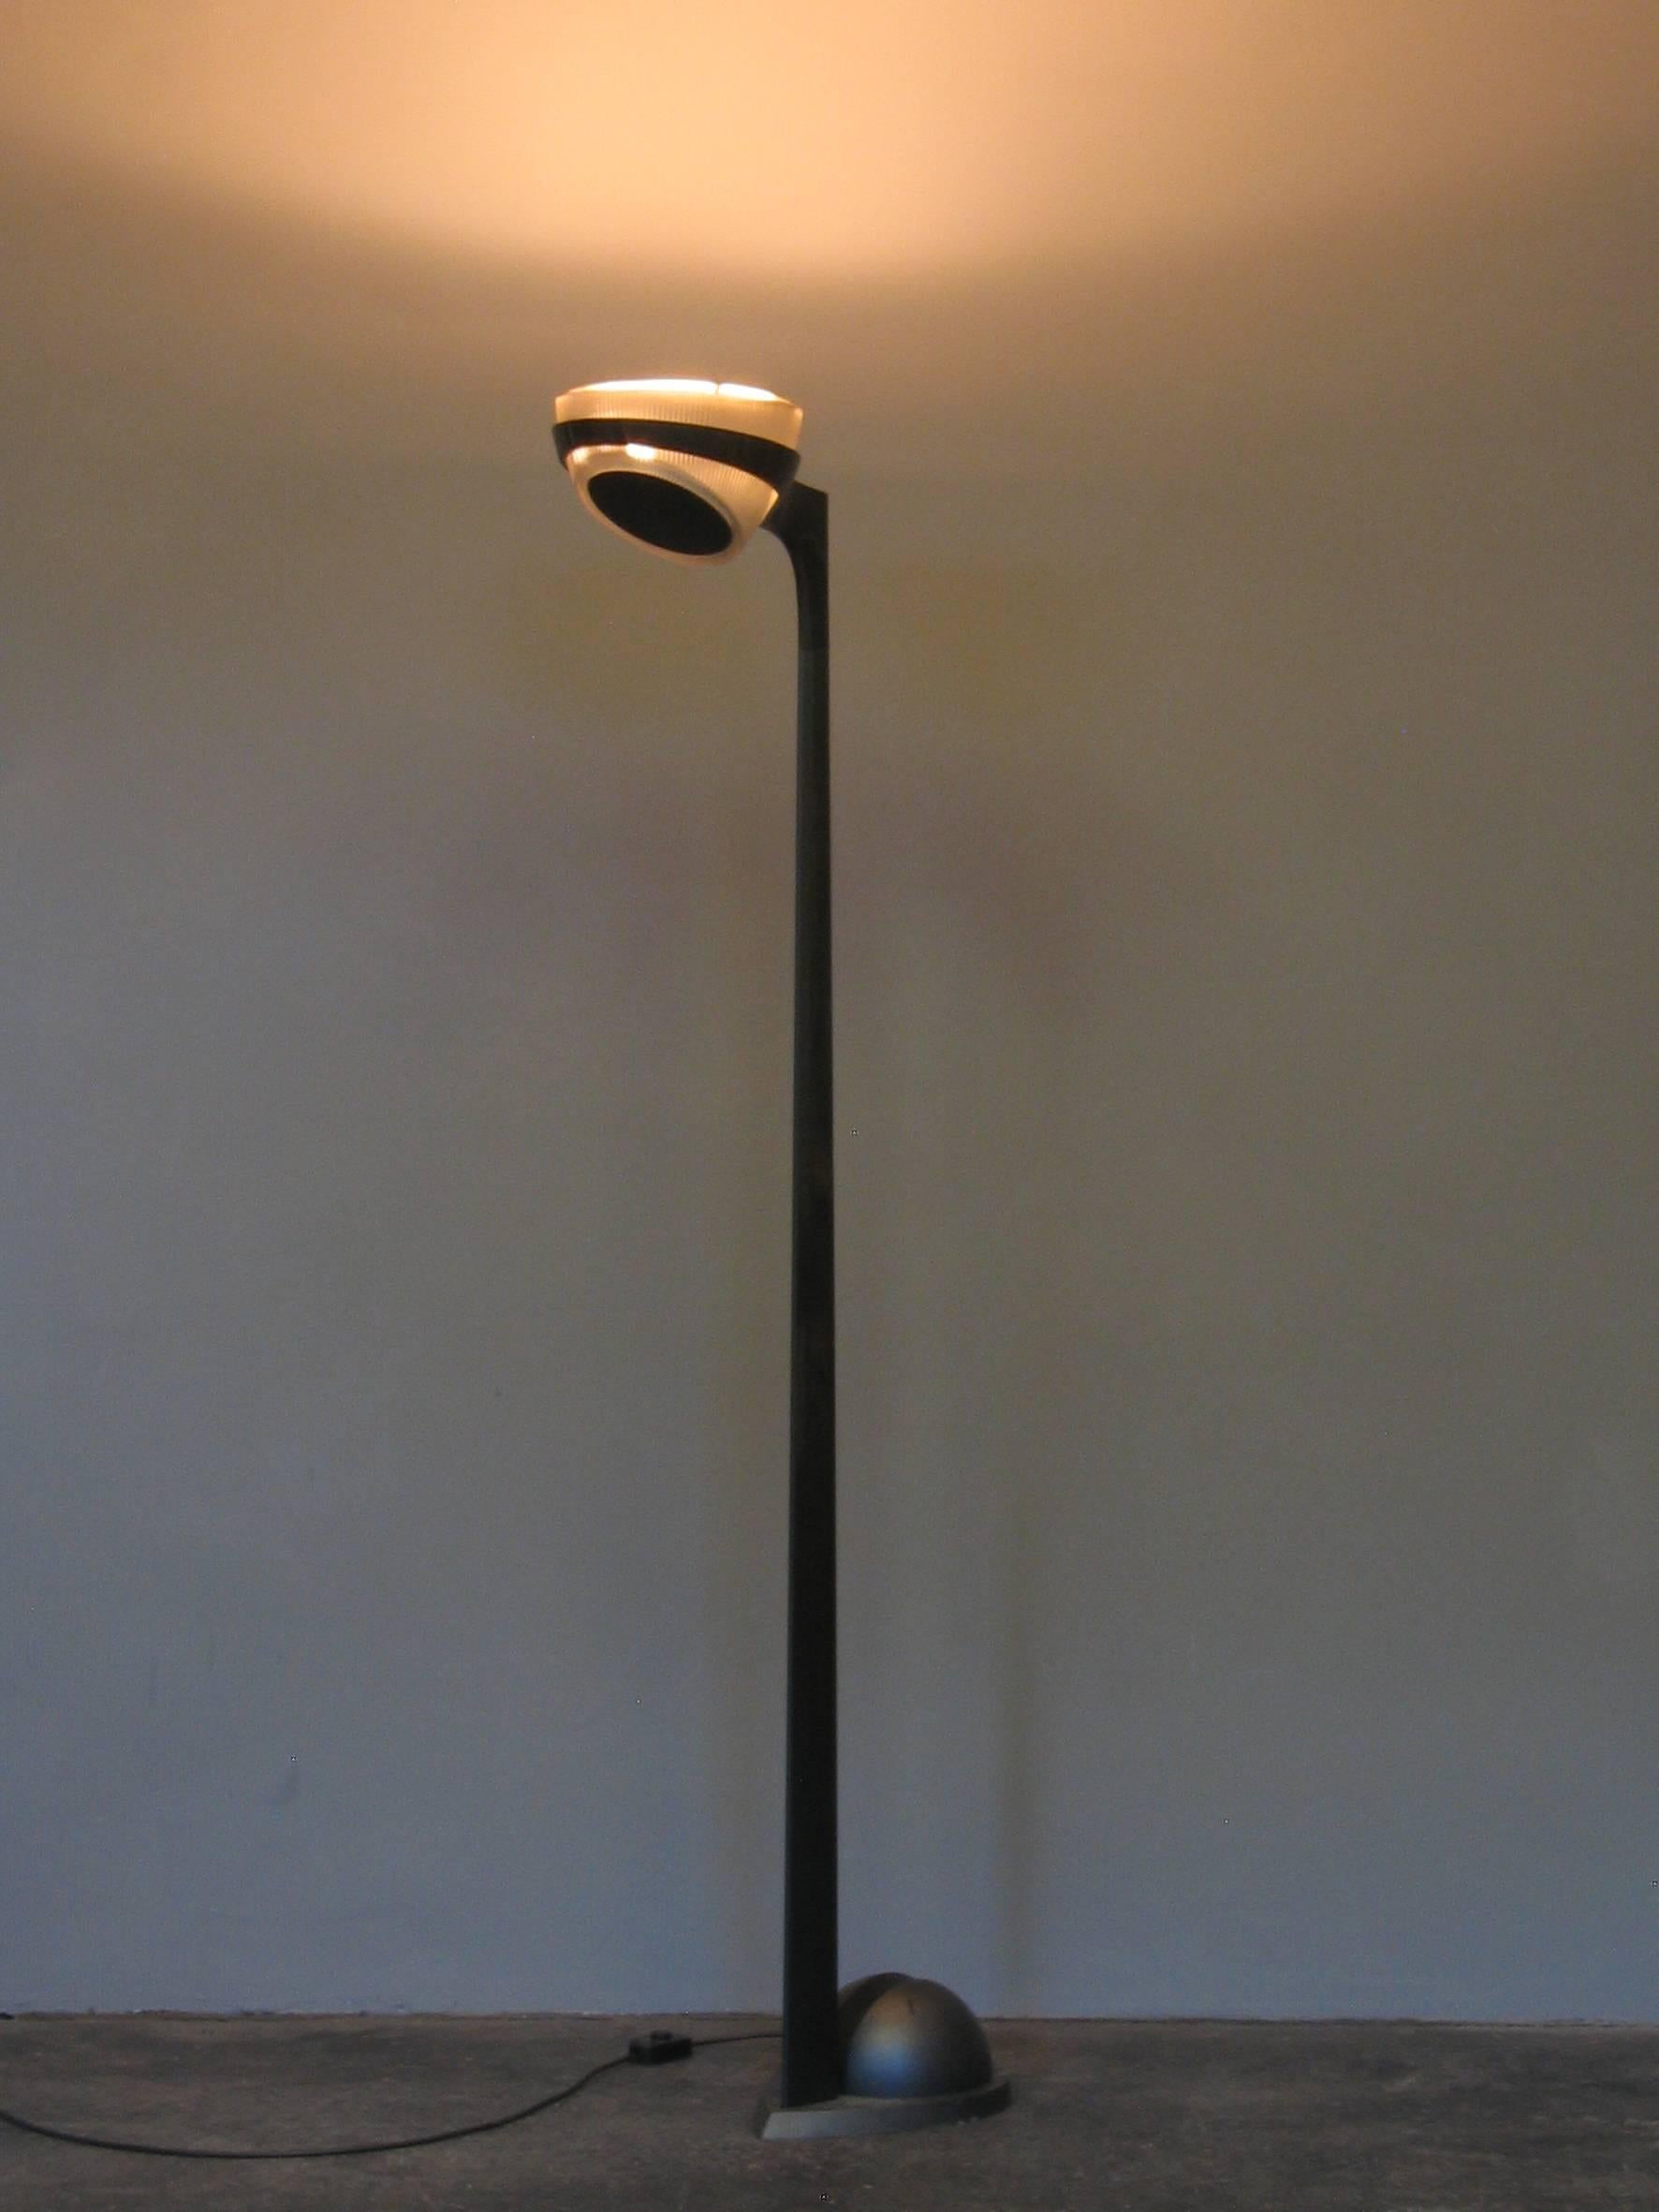 A Sistema Grall floor lamp by Ferrari, Pagani & Perversi for Arteluce. Awarded with the Compasso d'Oro in 1991. Published in Gramigna, Design Italiano 1950-2000, 2003.